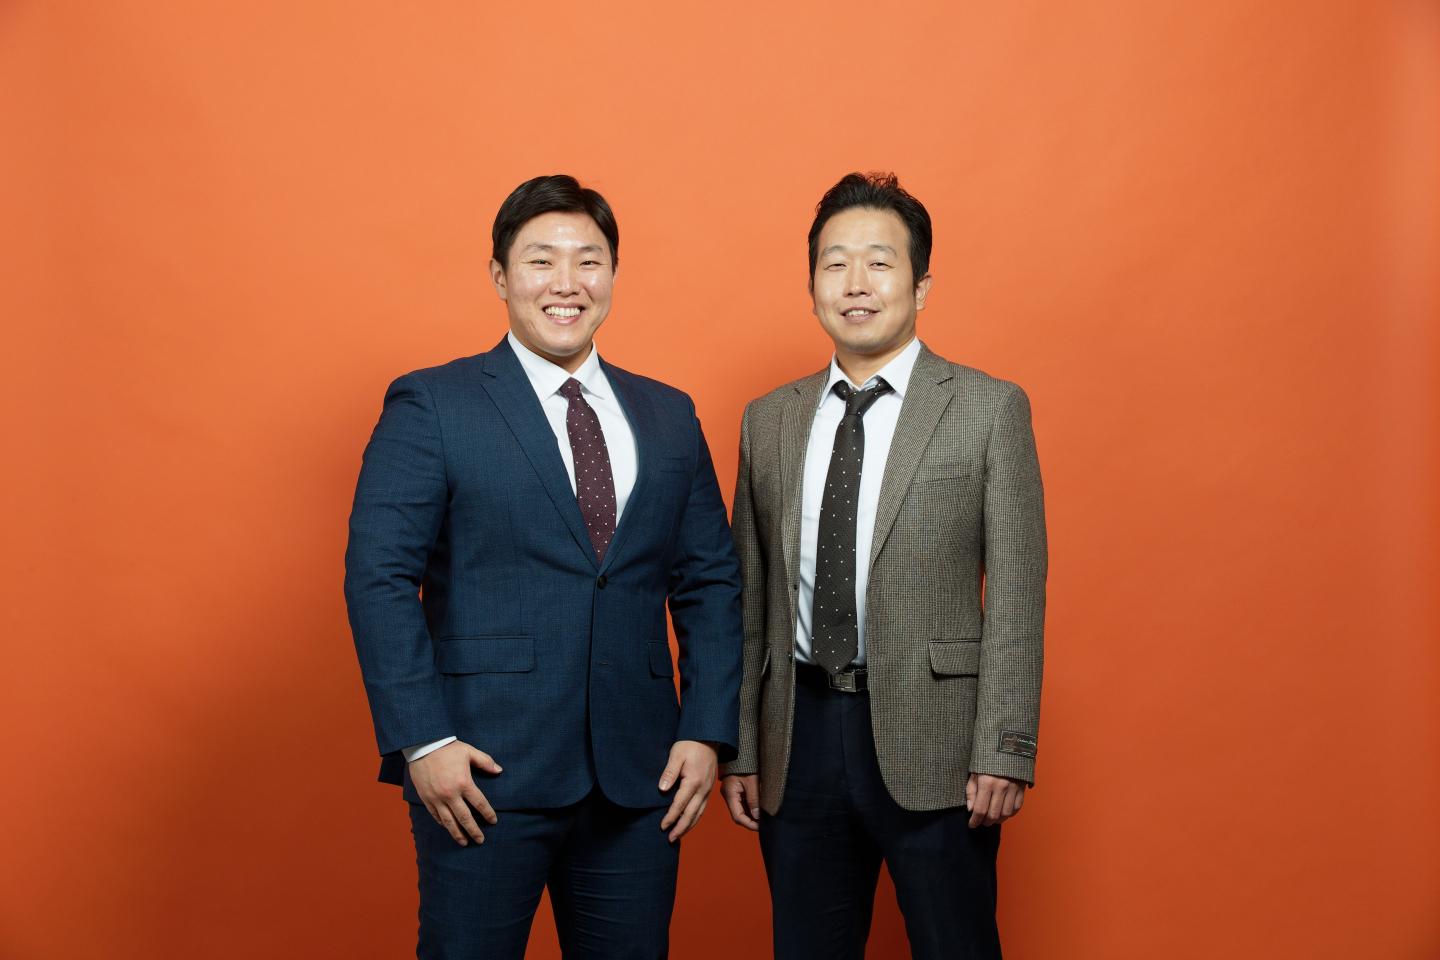 Jong Won Oh (left) and Professor Jiseok Lee (right)